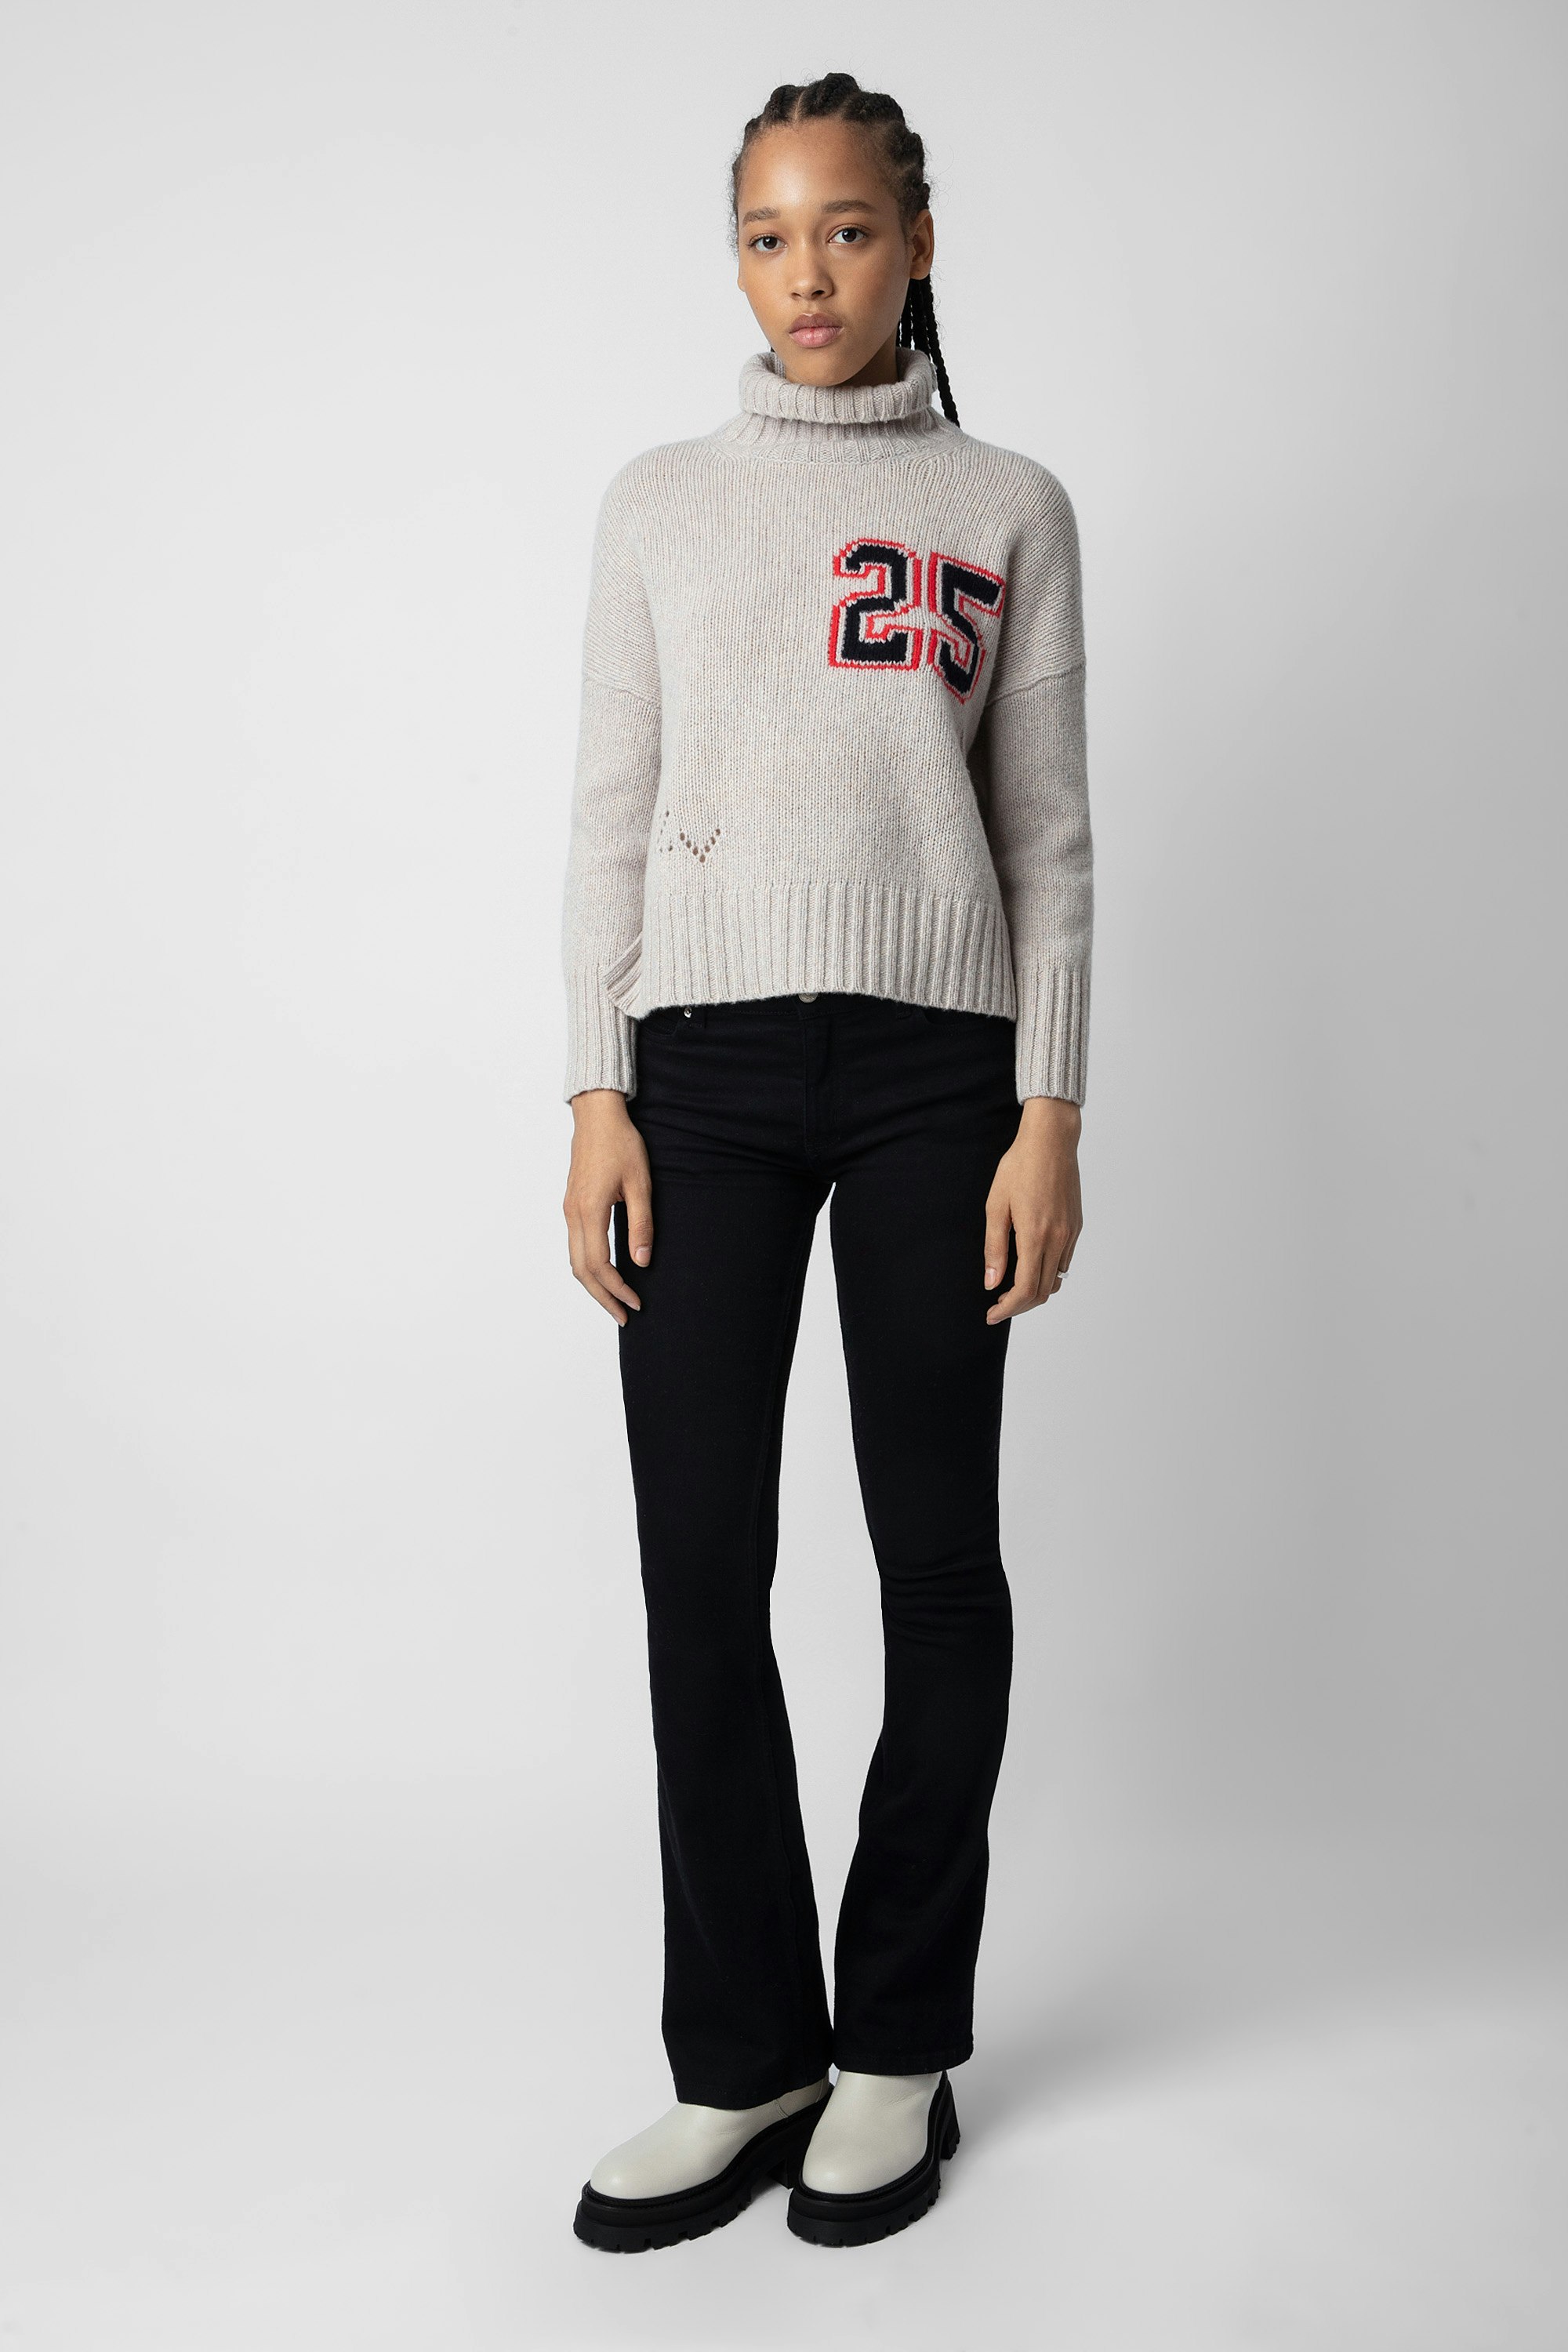 Blee 25 Sweater - Women’s beige merino wool sweater with mock neckline and intarsia jacquard “25” slogan.